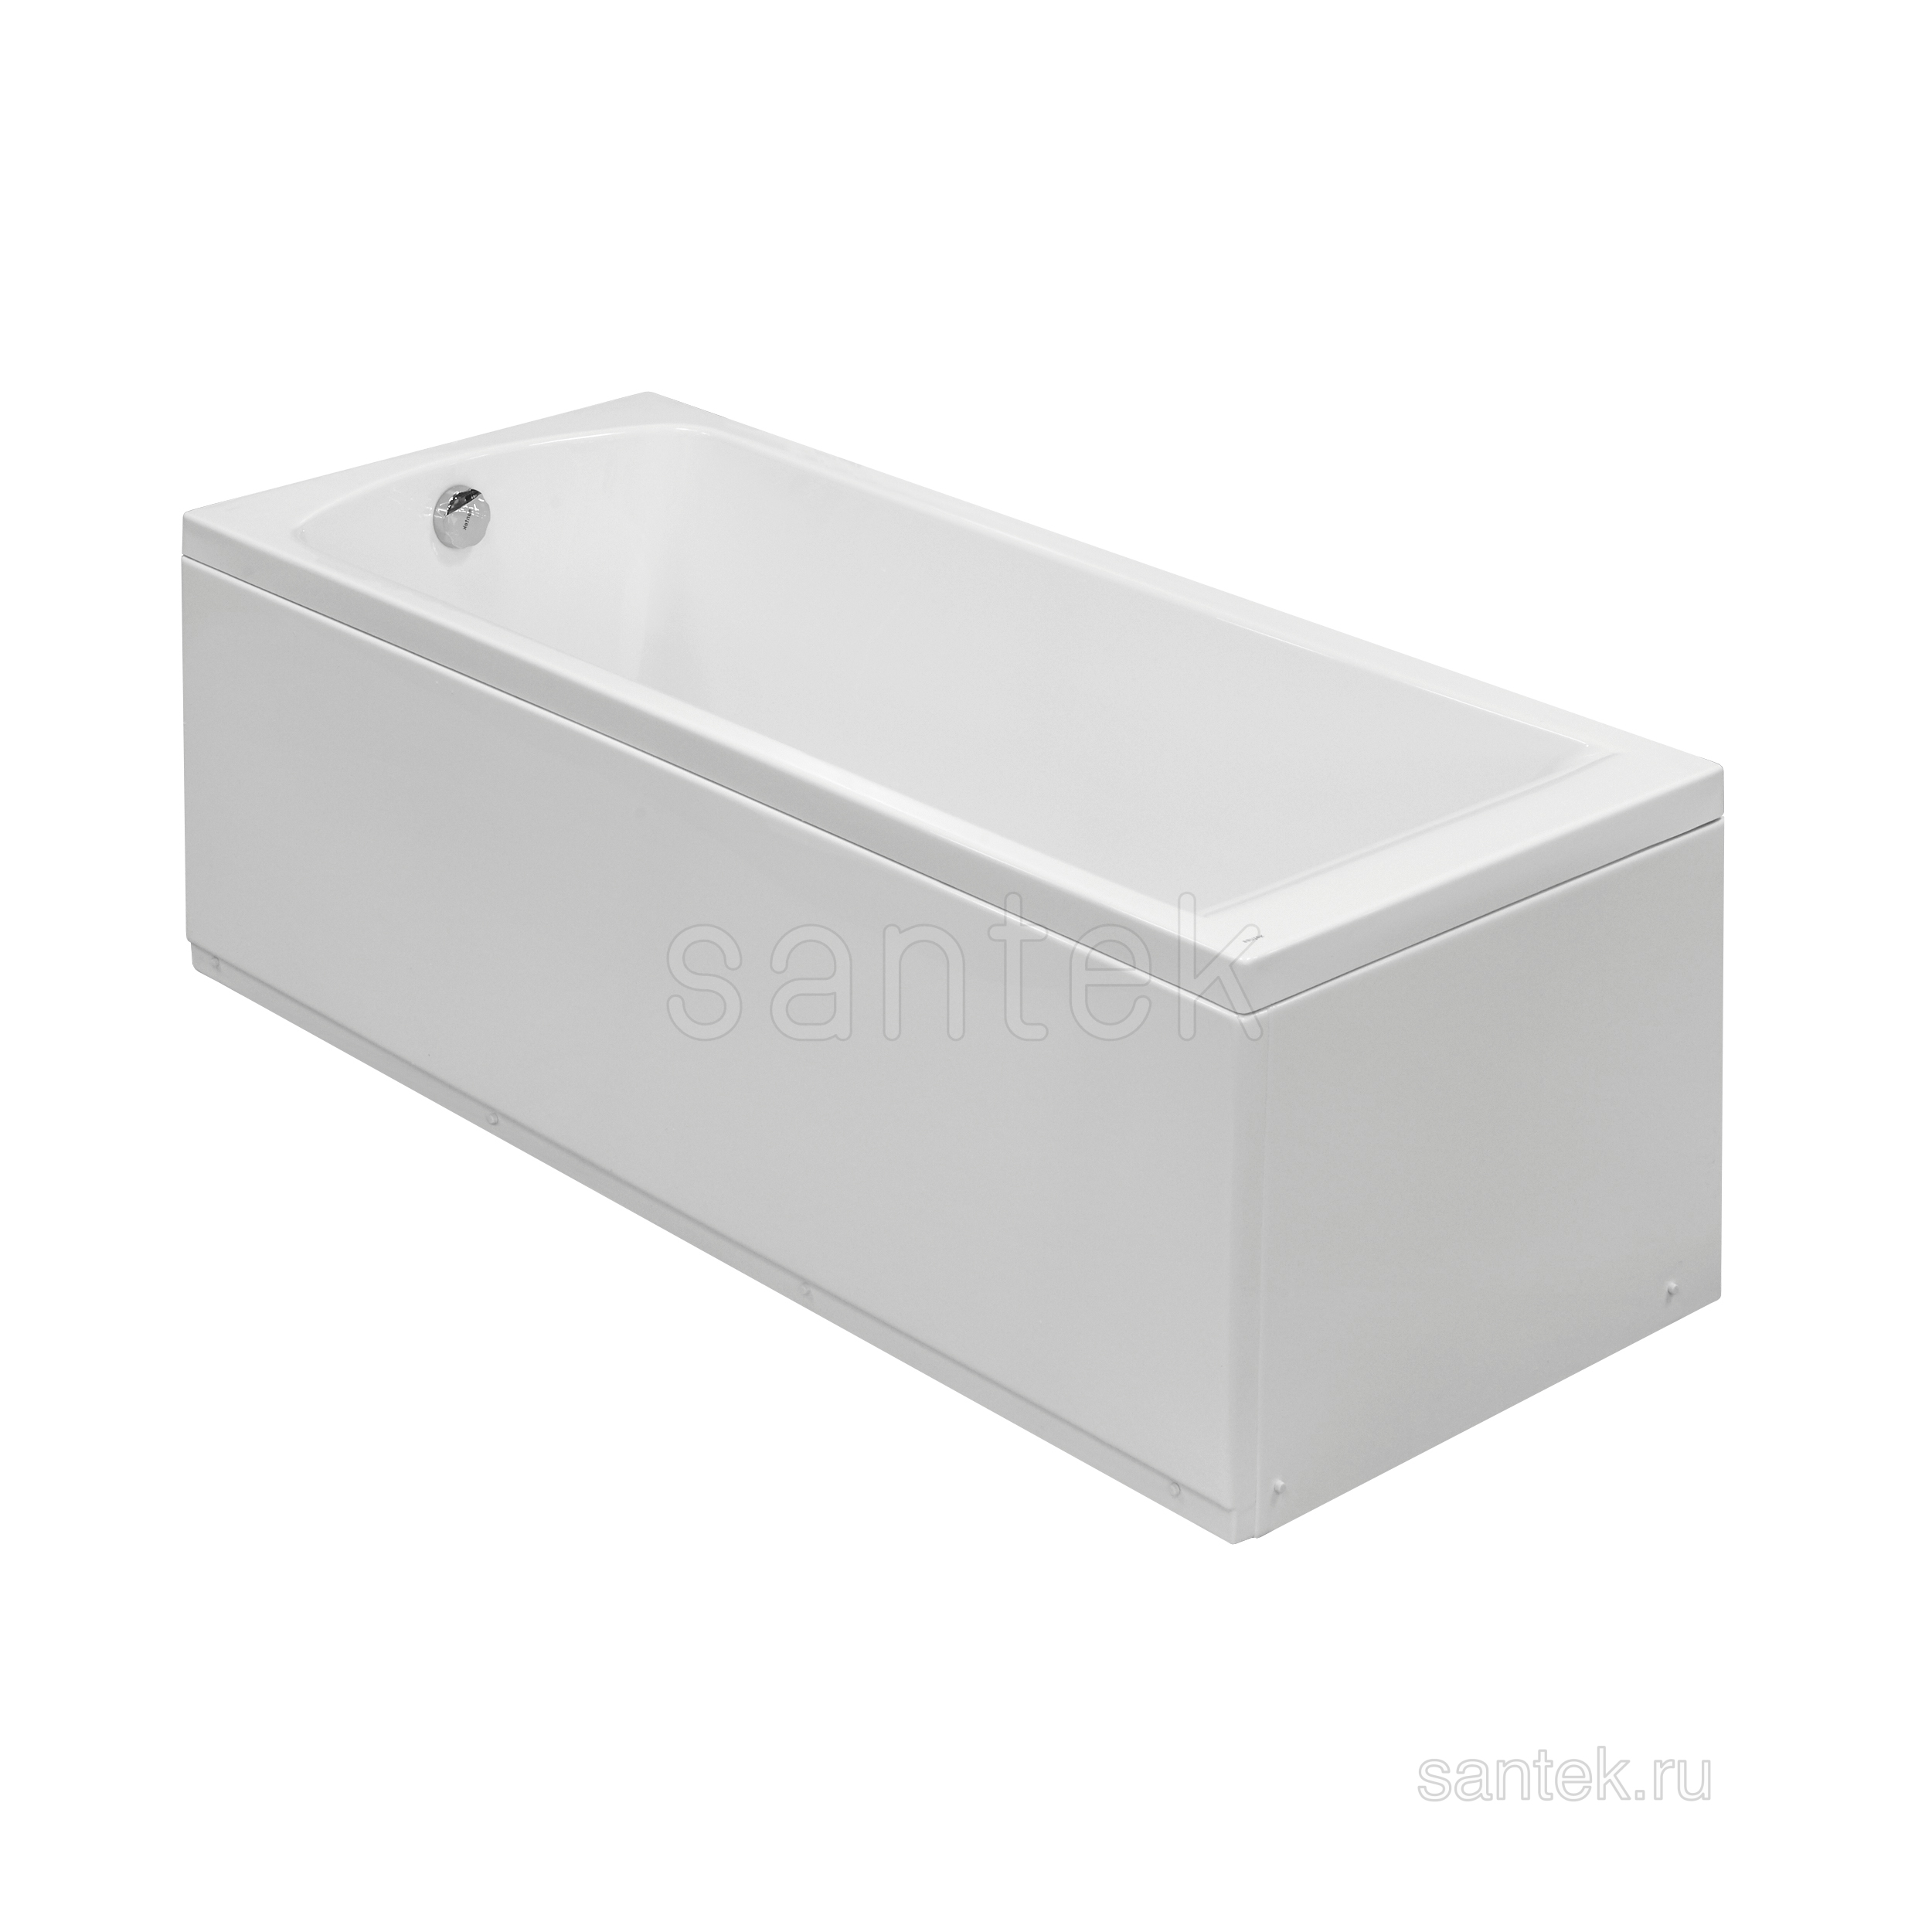 Акриловая ванна Santek Фиджи 170х75 прямоугольная 1WH501596